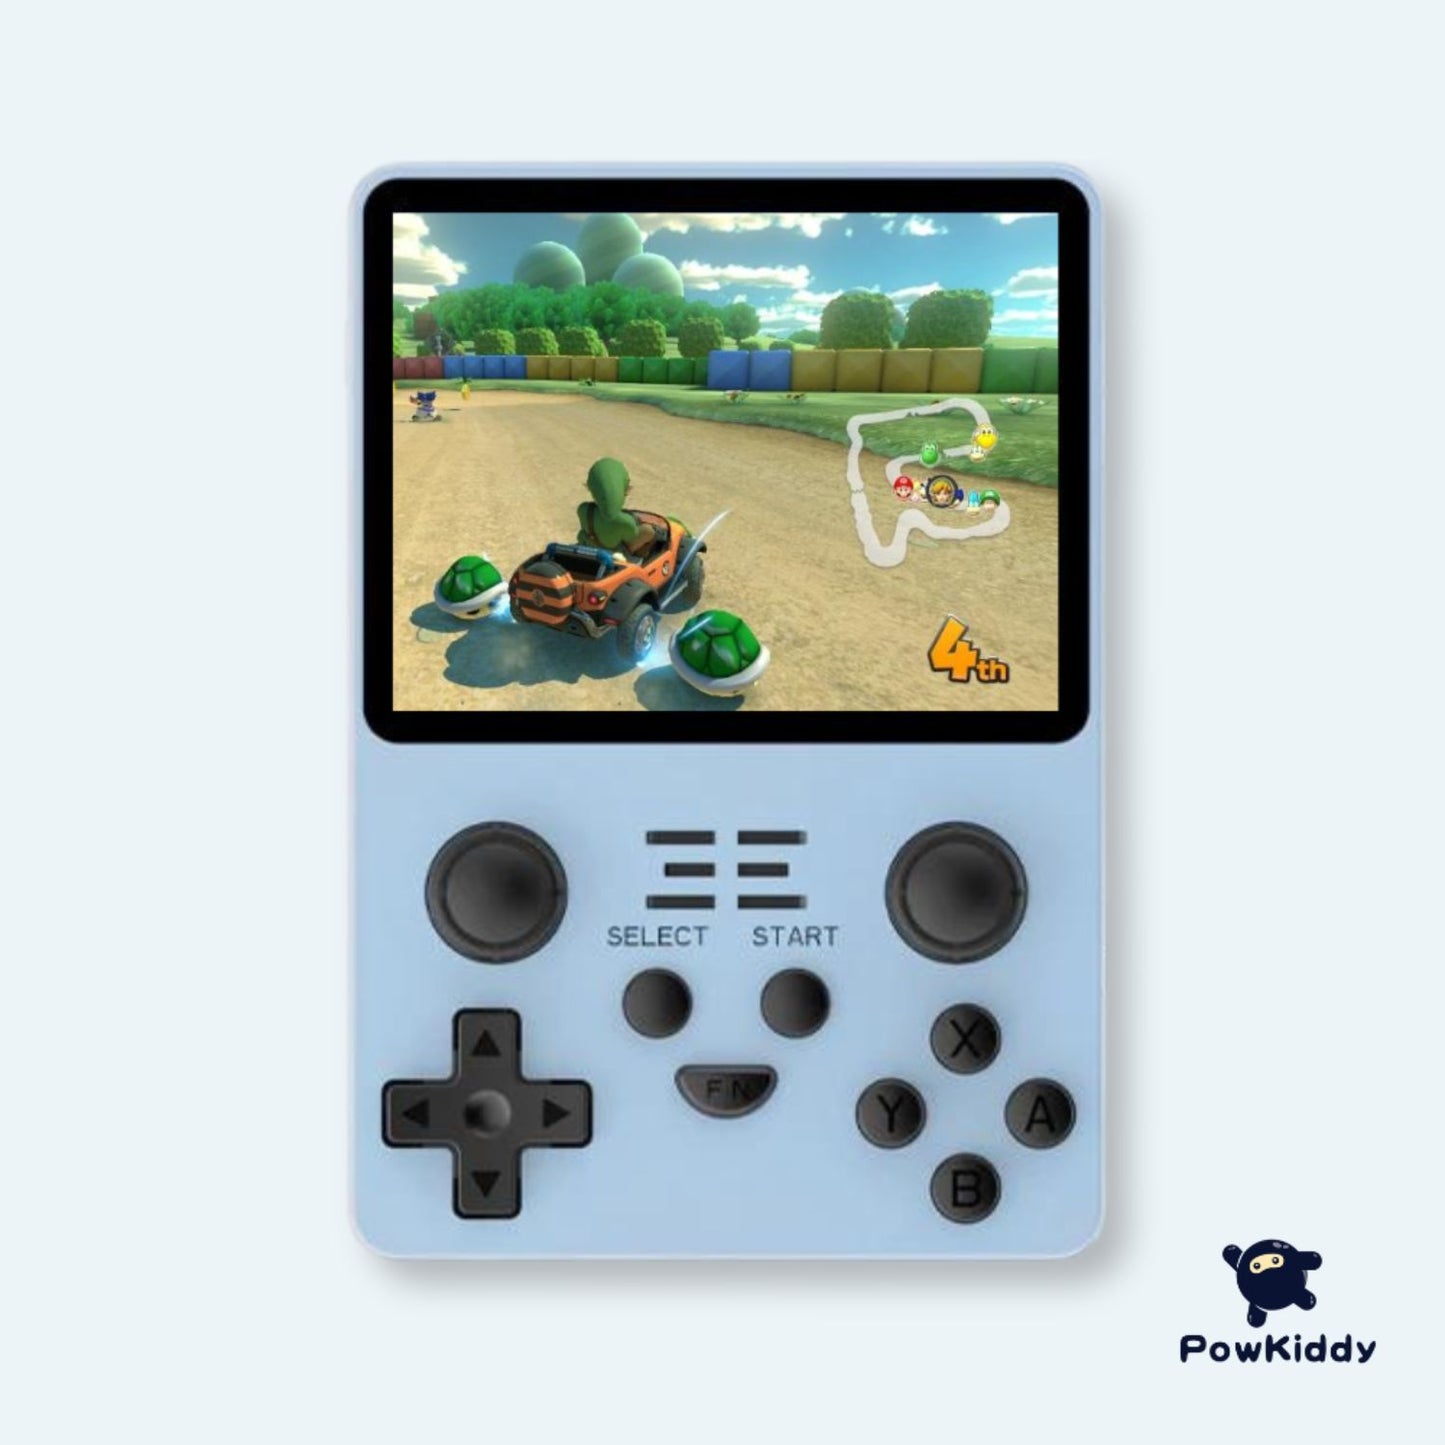 PowKiddyRGB20s Game Console